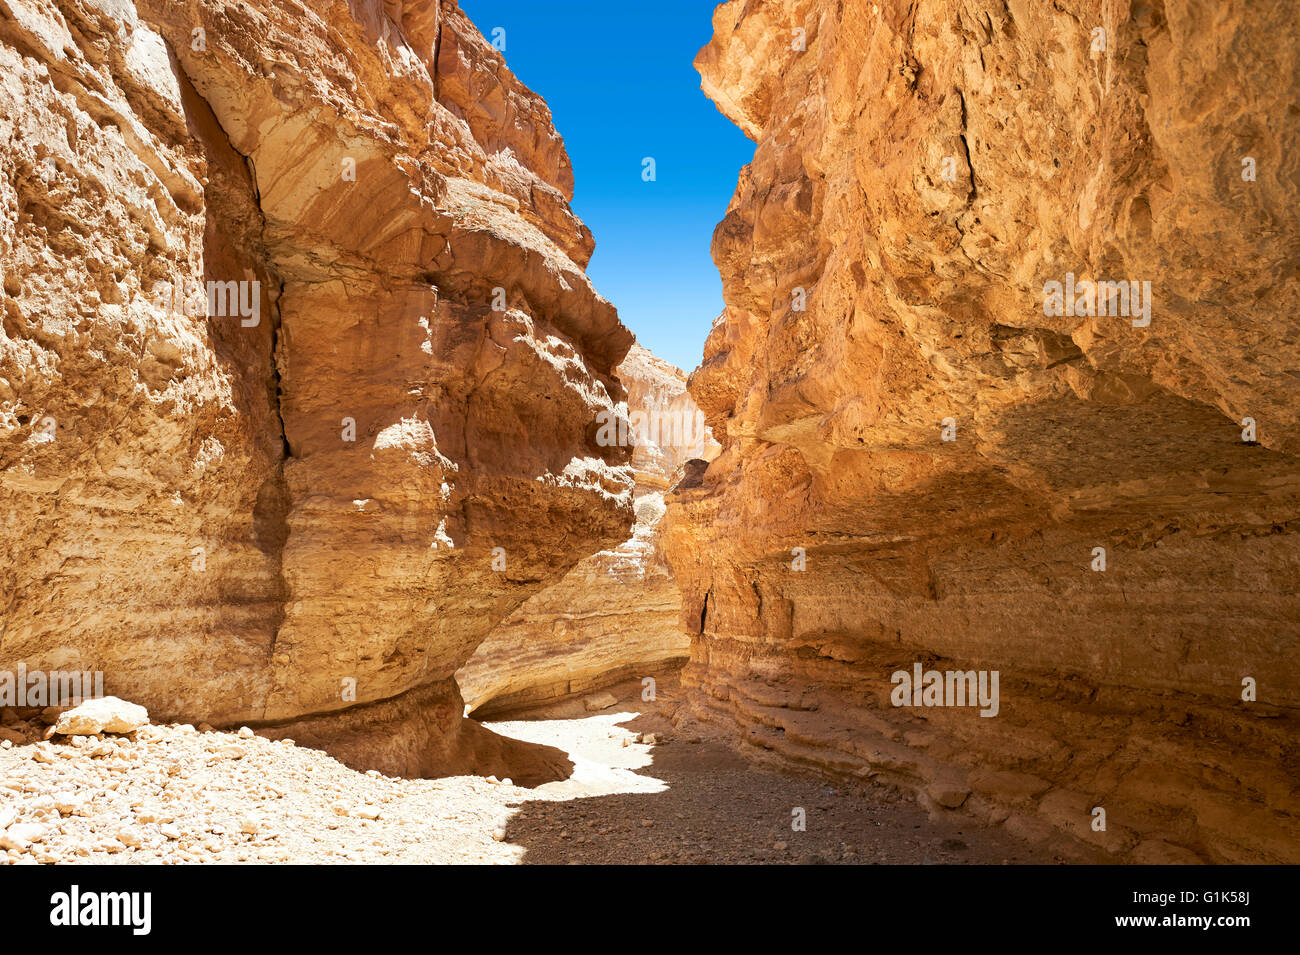 El Desert Canyon, cerca del Sahara oasis de Mides, Túnez, África del Norte Foto de stock